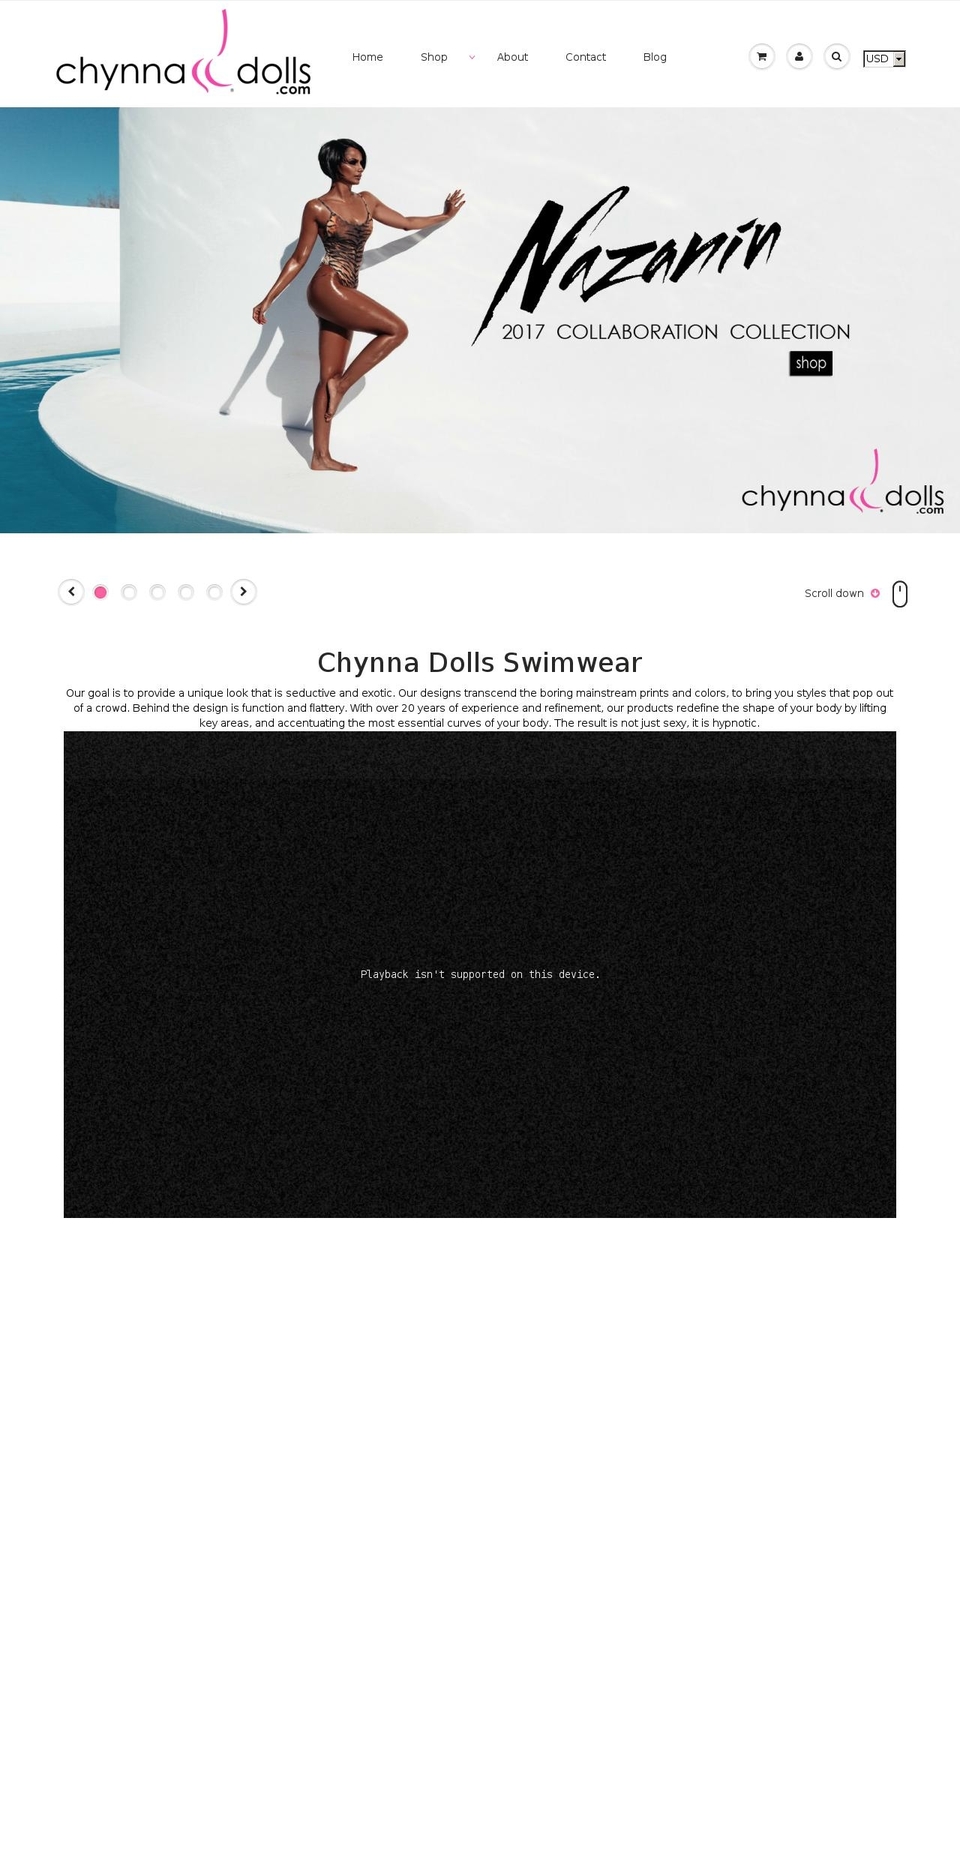 chynnadolls.se shopify website screenshot